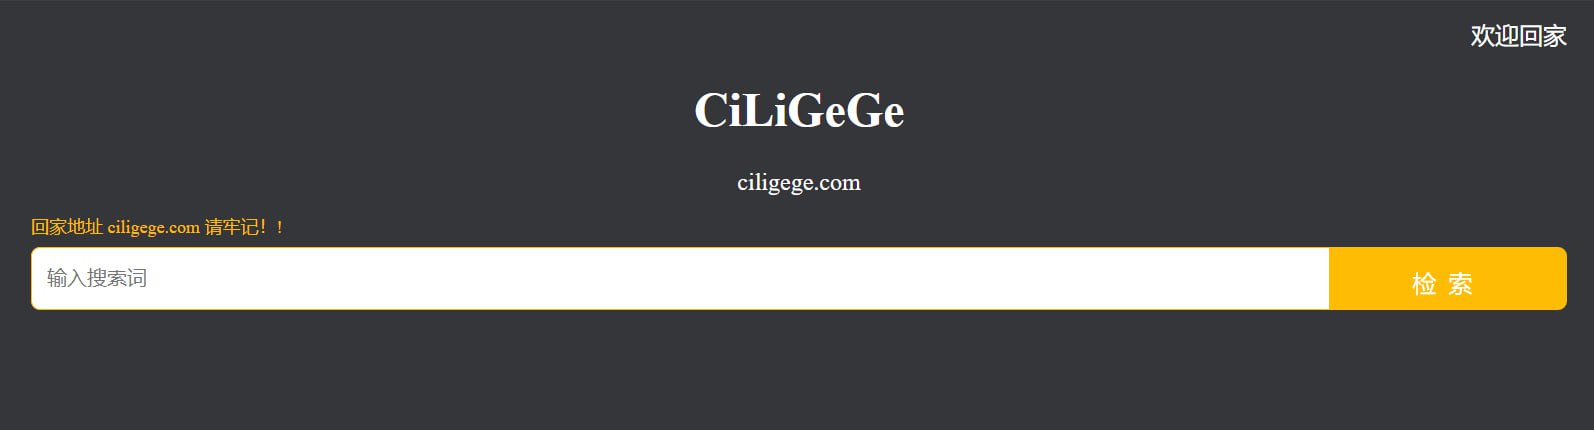 CiLiGeGe 一个免费的磁力搜索引擎